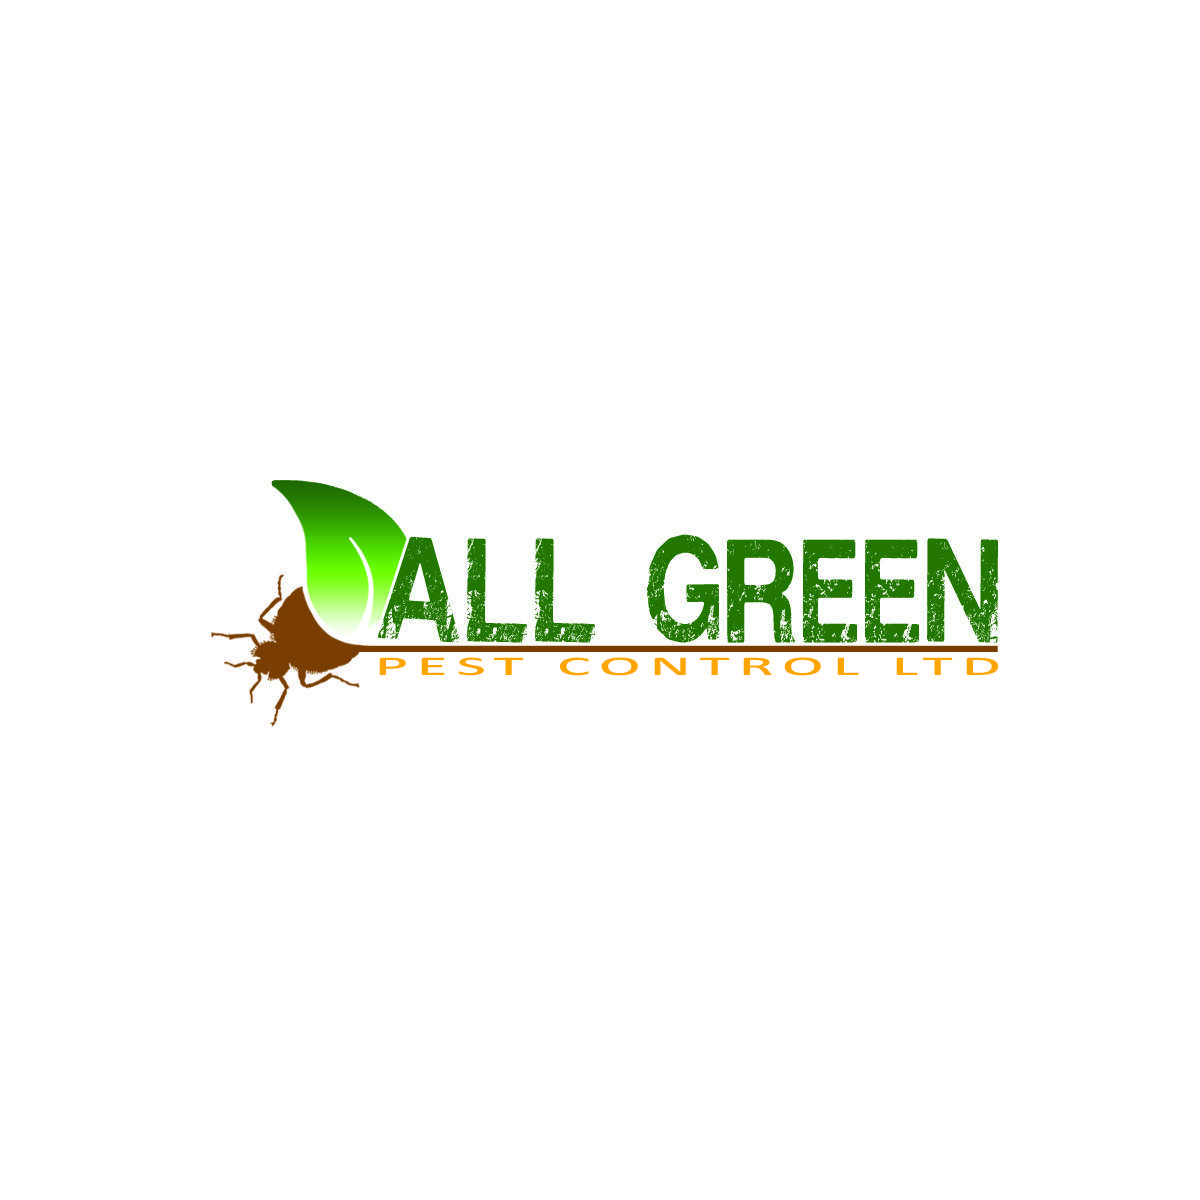 Multi Animal Company Logo - Professional, Serious, It Company Logo Design for All Green Pest